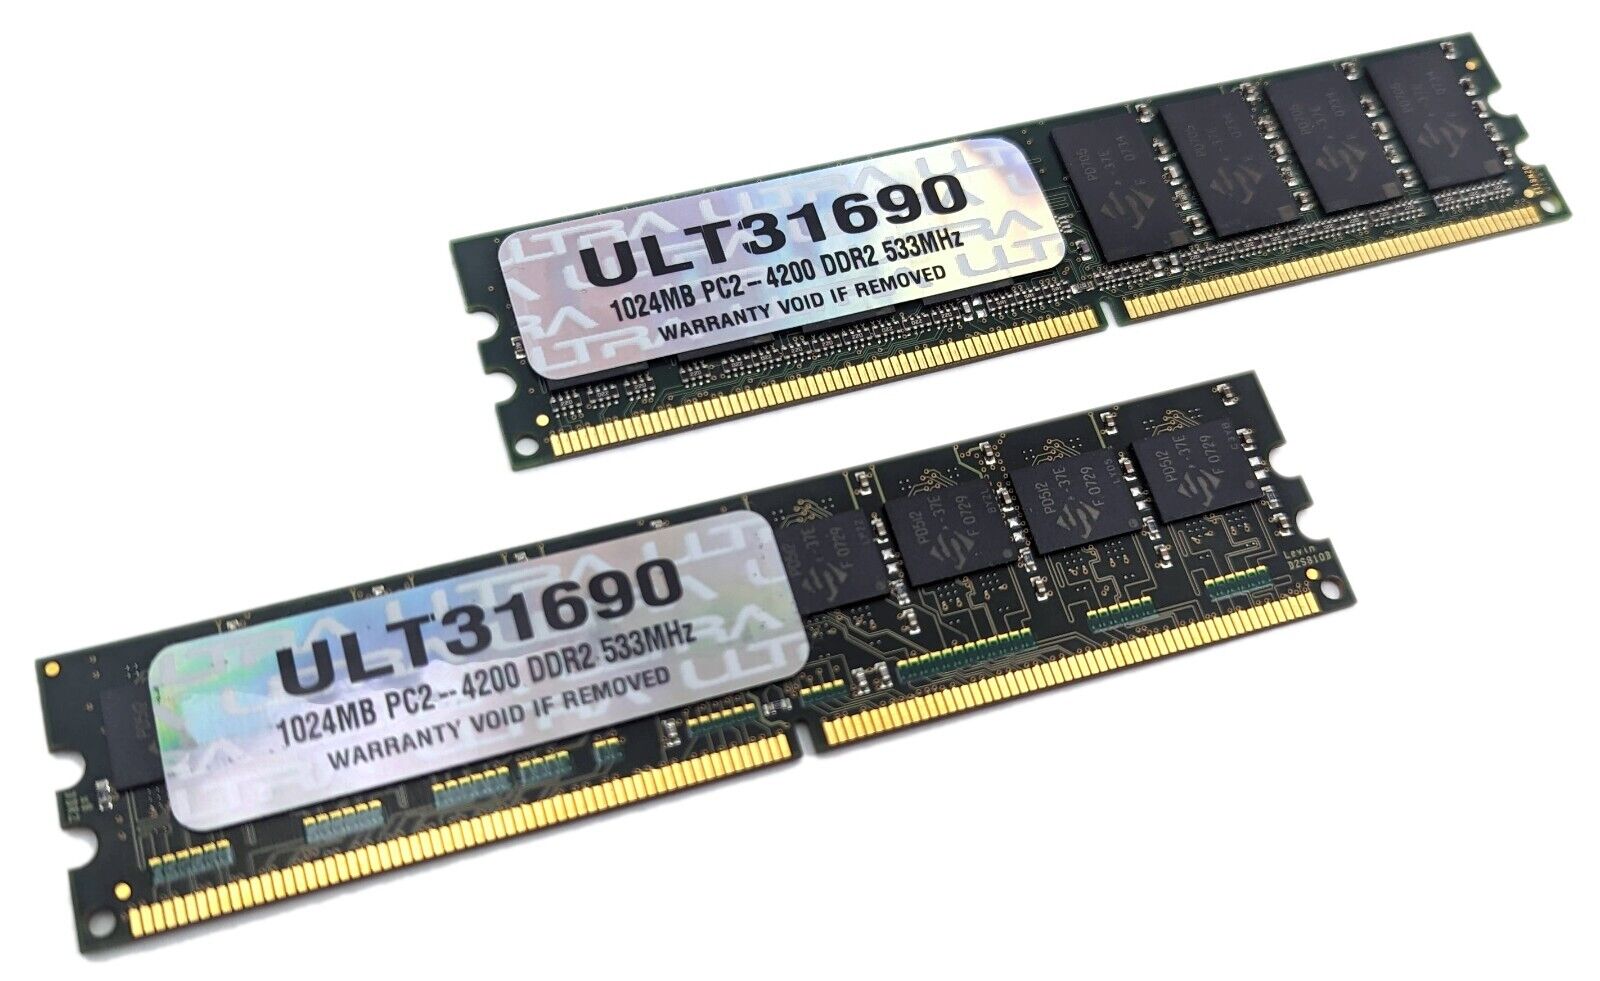 ULTRA ULT31690 2GB Kit (2x 1024MB) 533 MHz PC2-4200 DDR2 Desktop Memory DIMM RAM